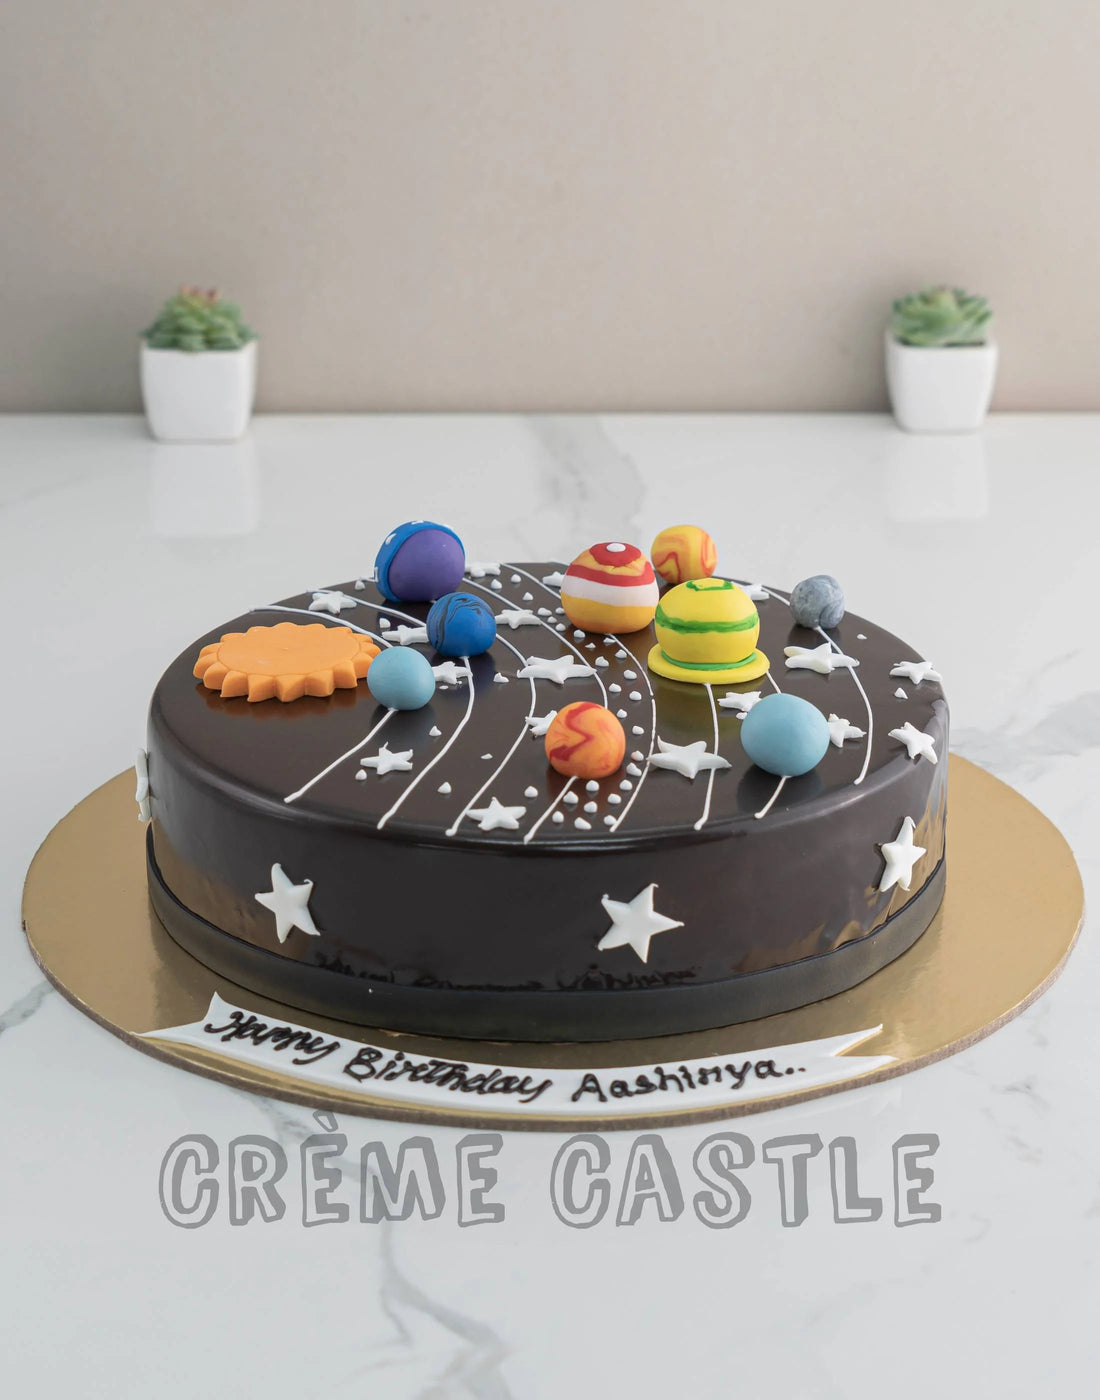 Solar System Theme Cake - Birthday Cake Designs for Year Old Boy - Designer Cake in Gurgaon